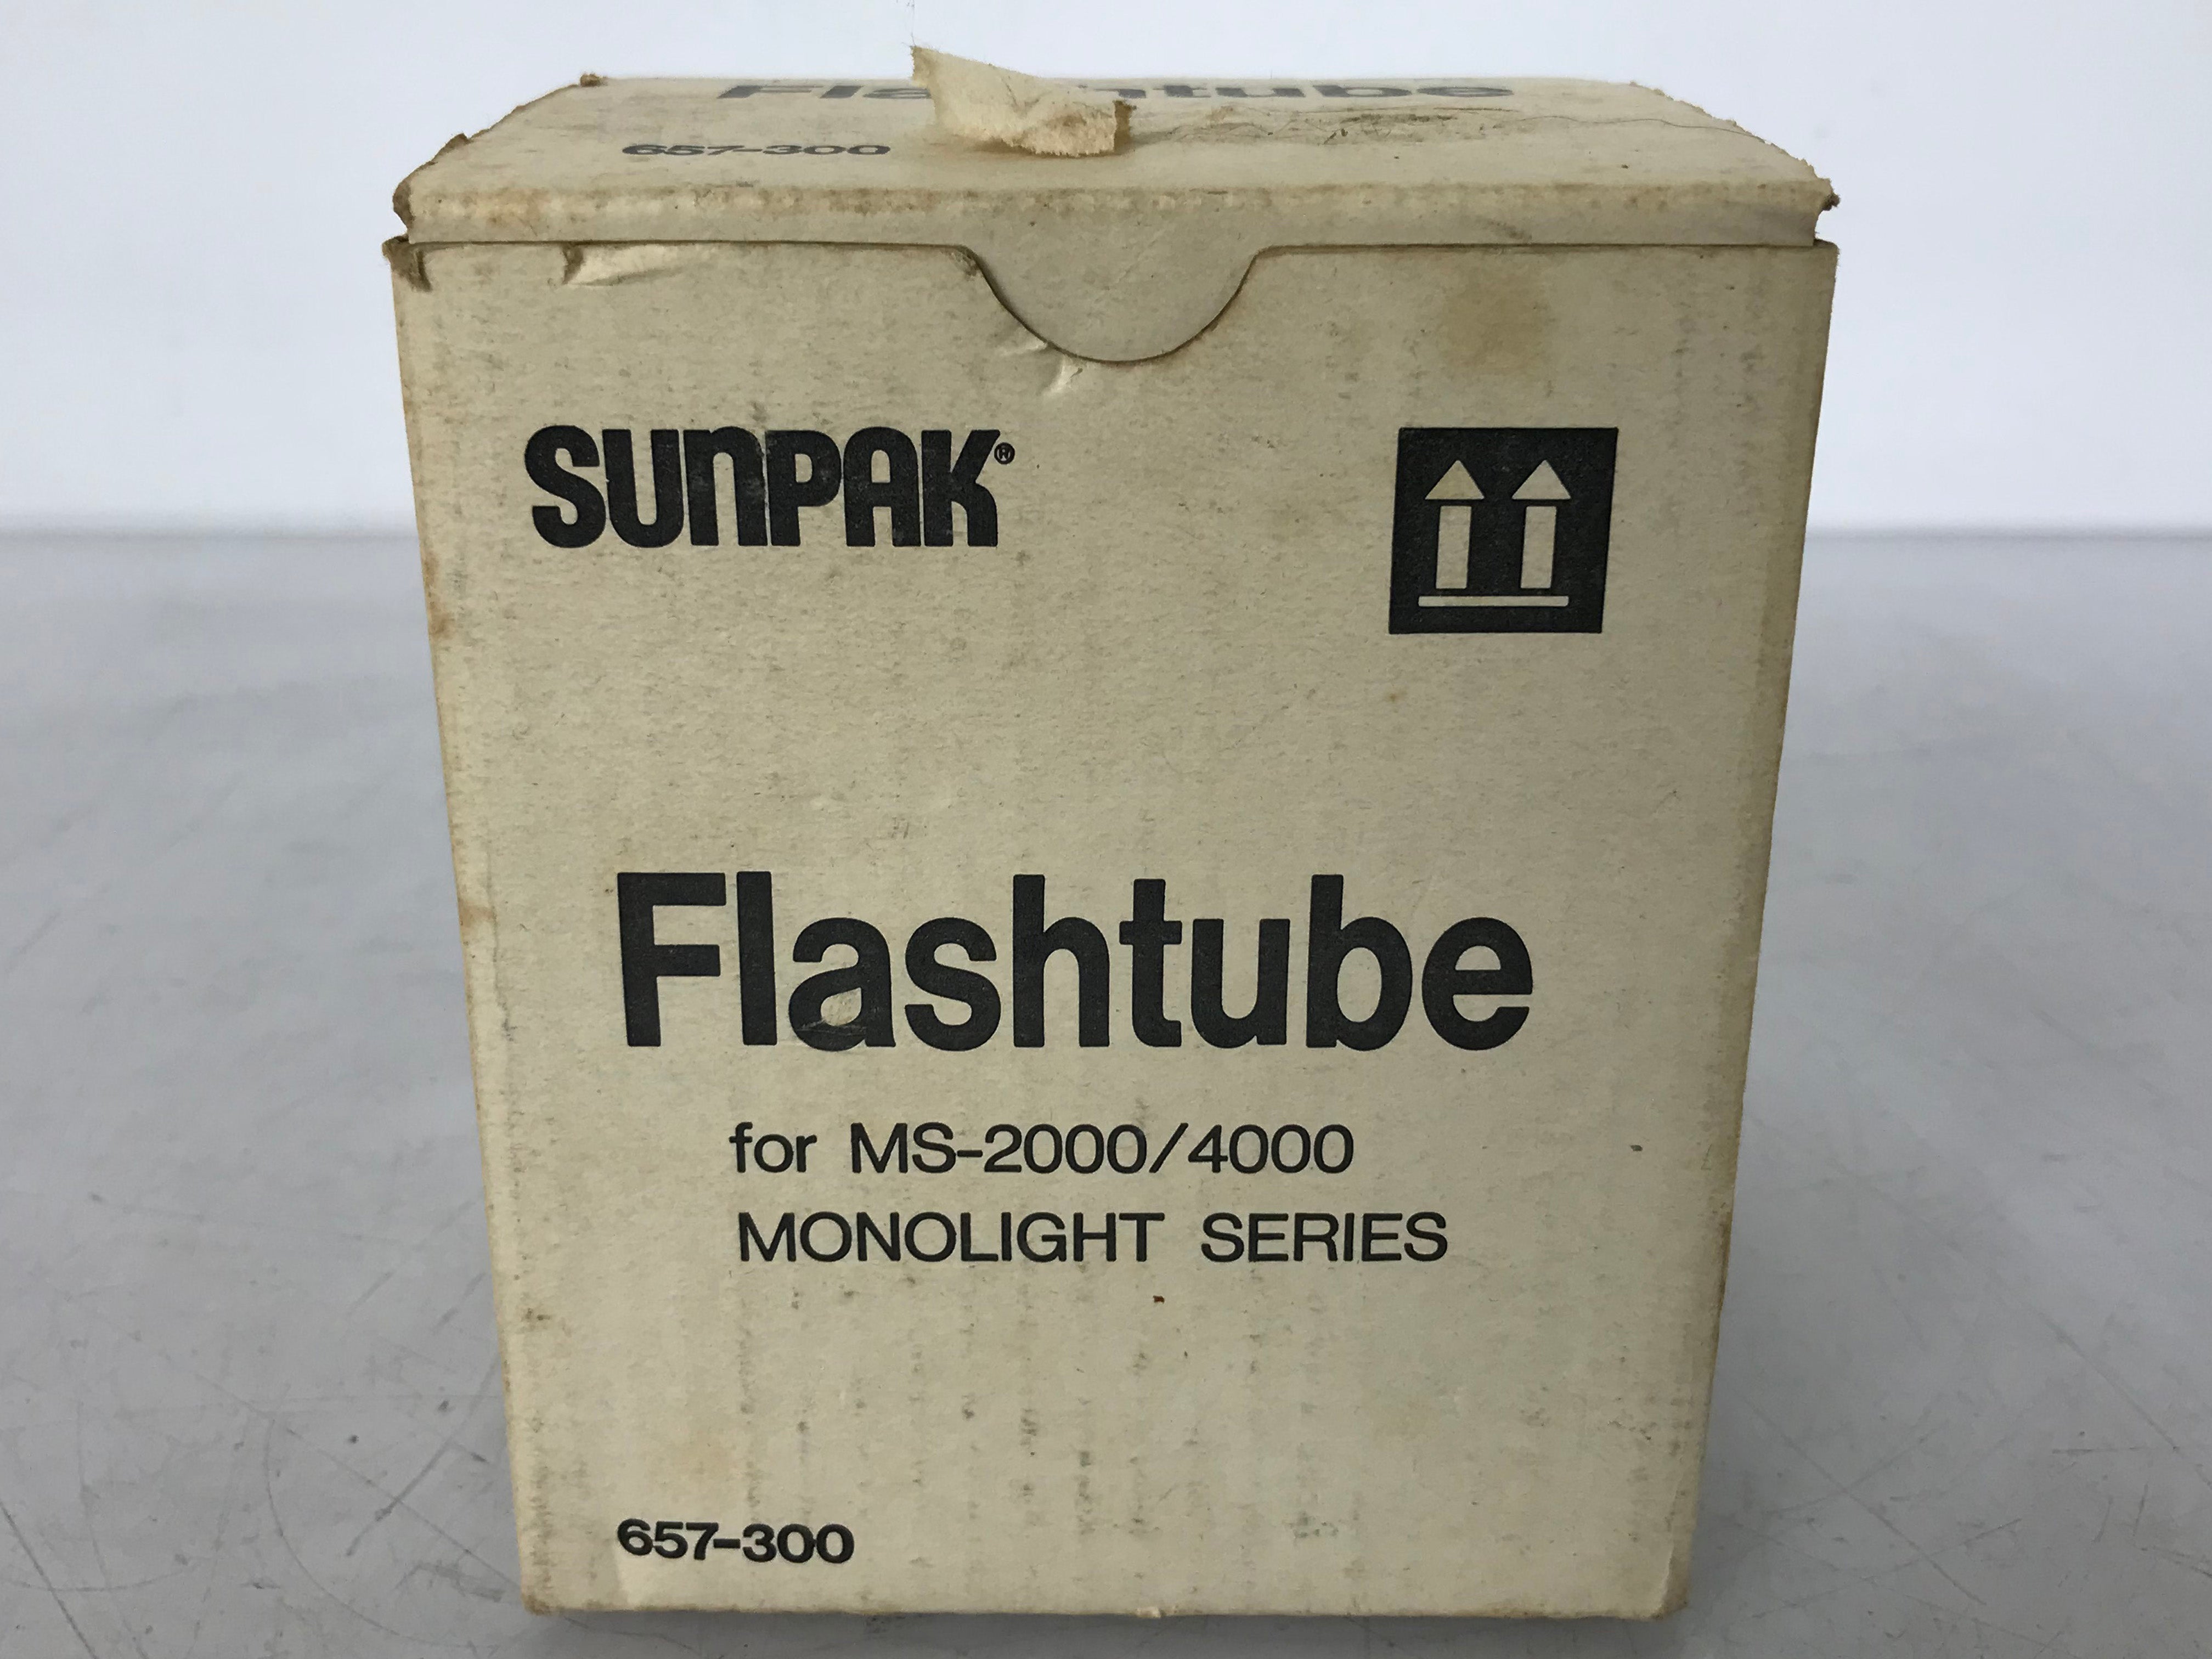 Sunpak Flashtube for MS-2000/4000 Monolight Series